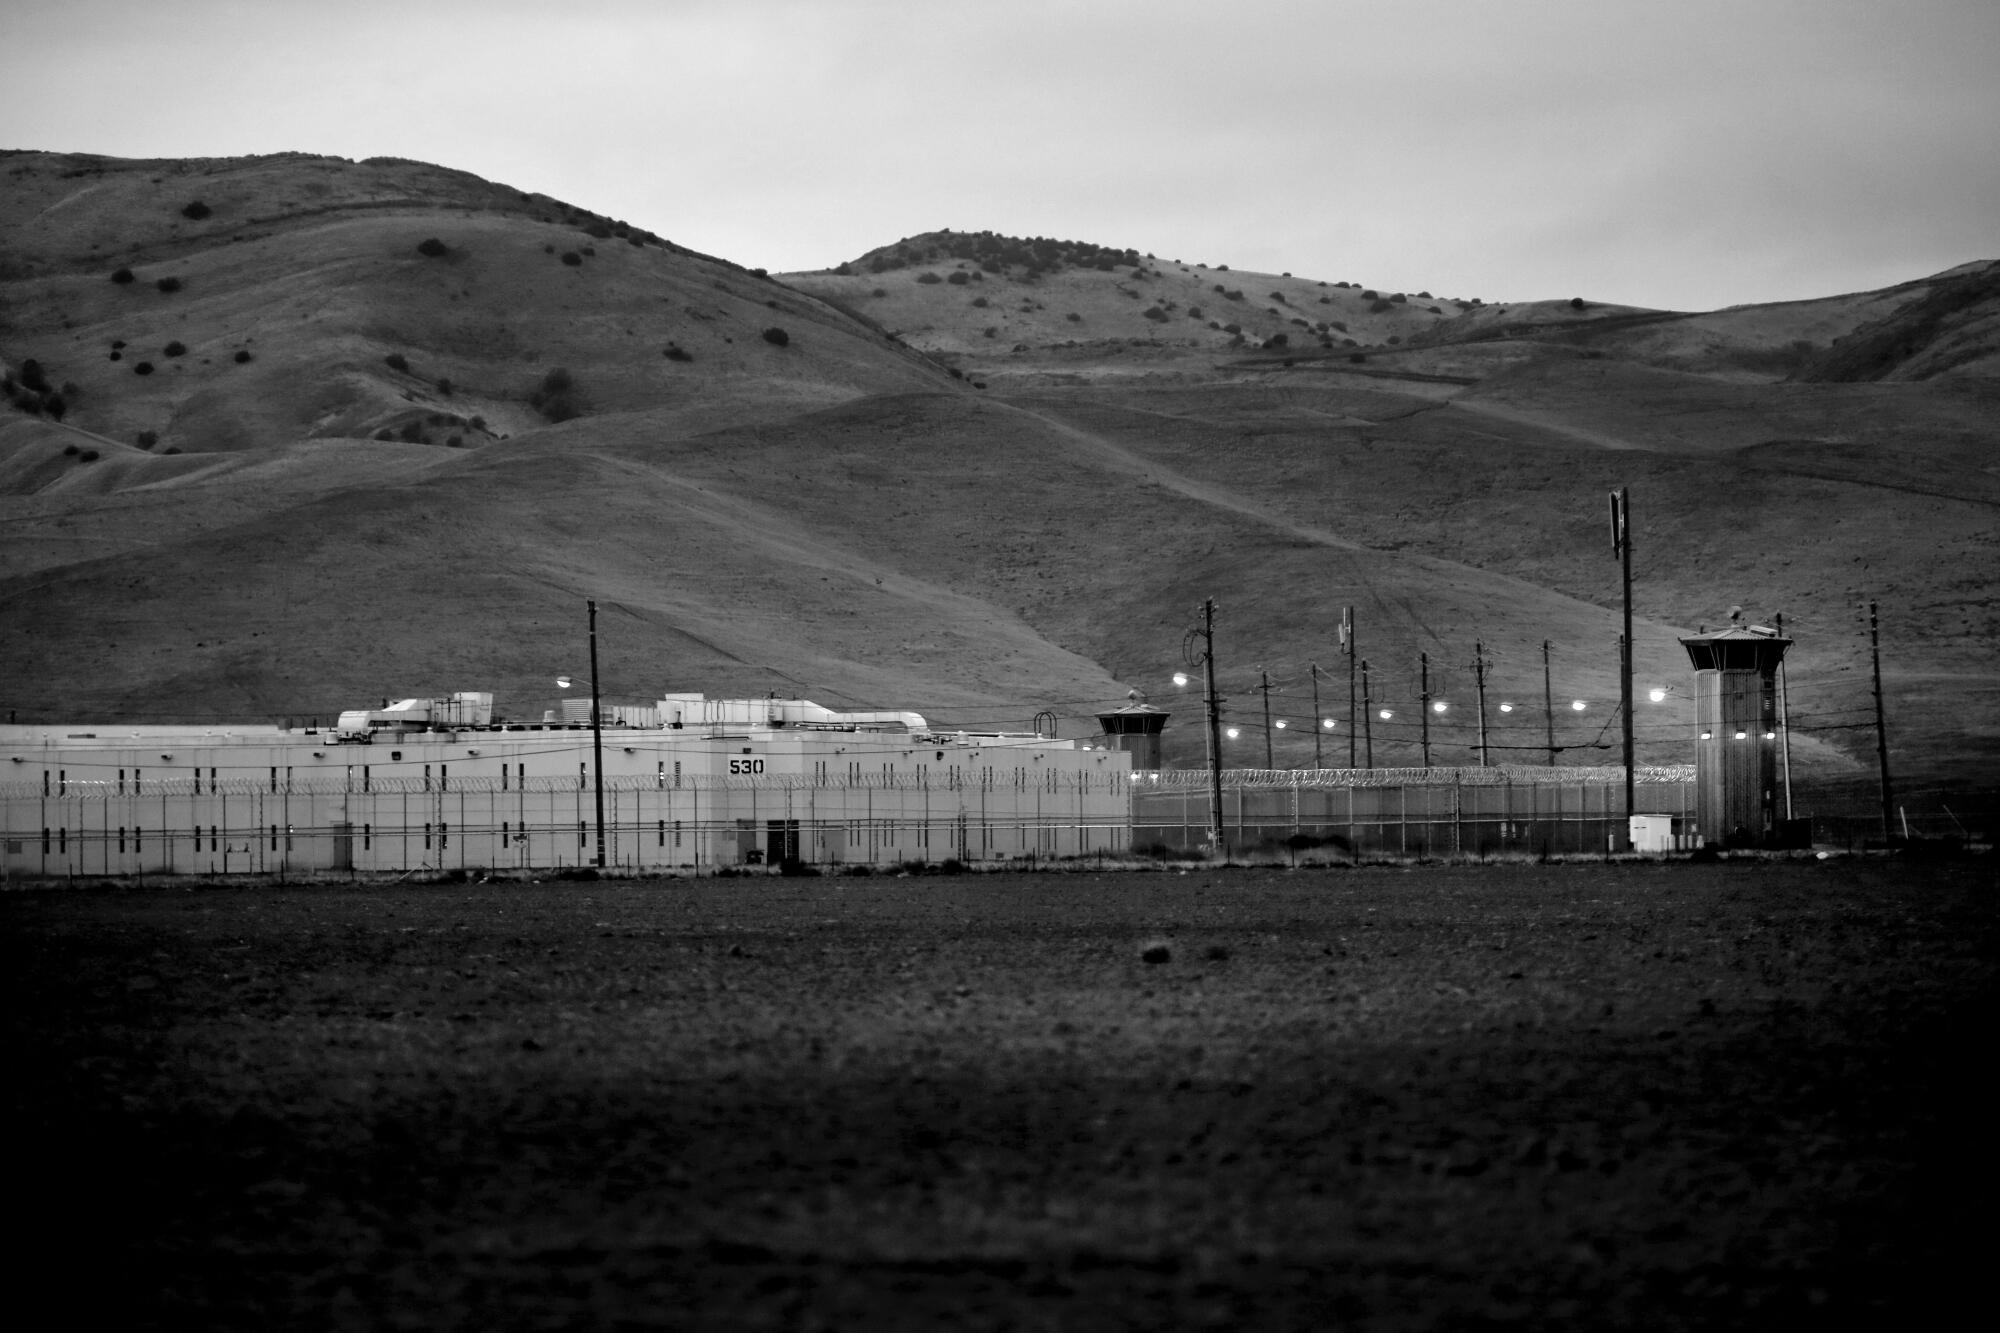 A fenced prison lies below grassy hills.